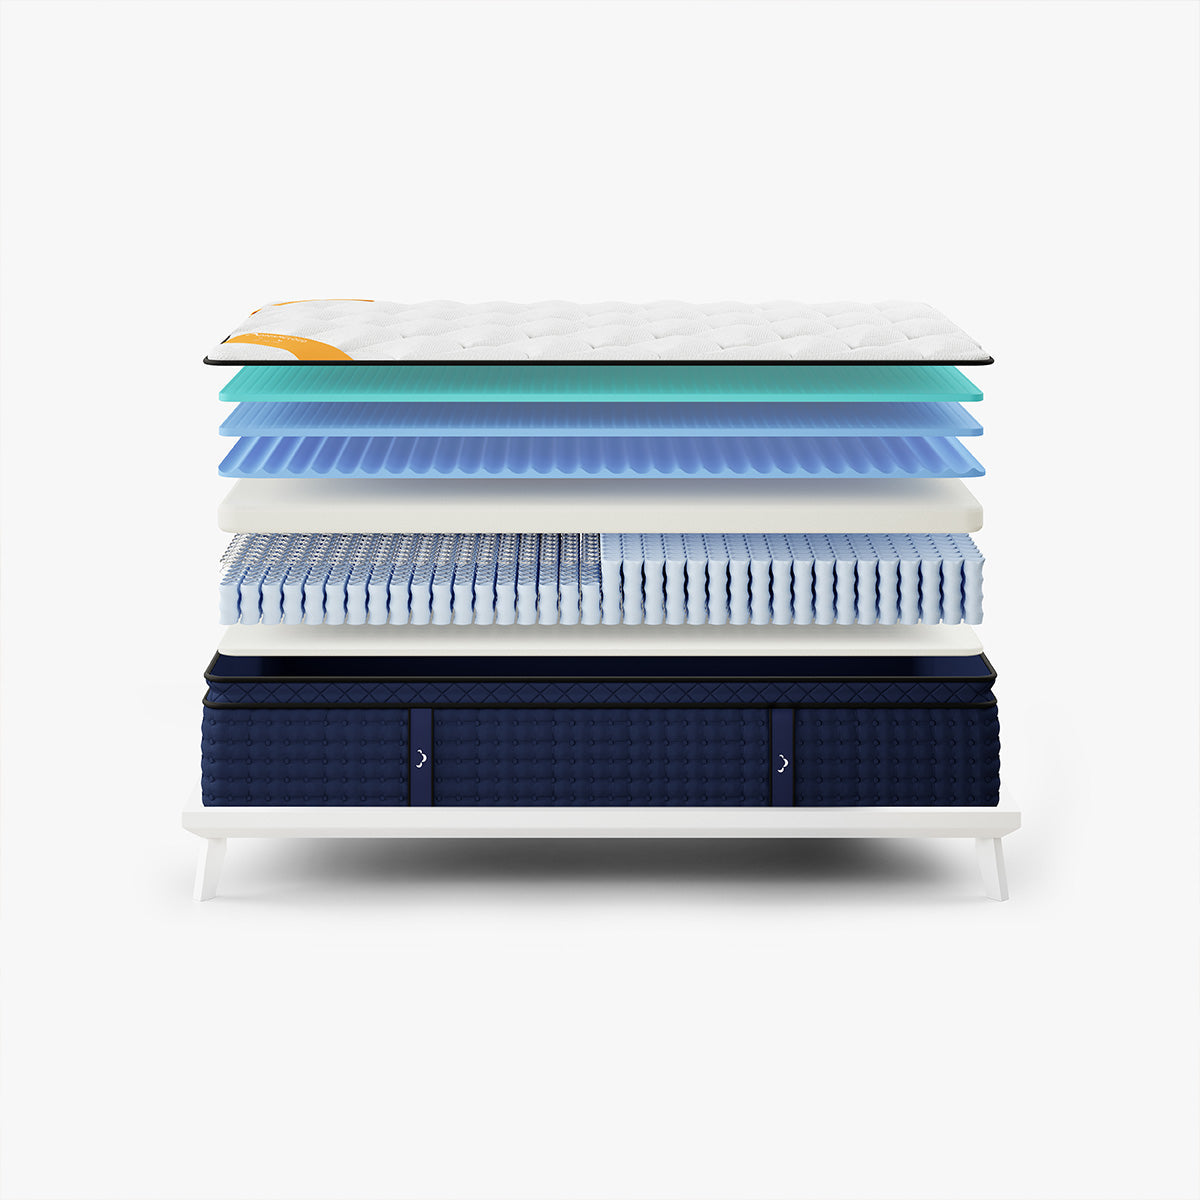 The DreamCloud Premier Rest Hybrid Mattress Layers Expanded